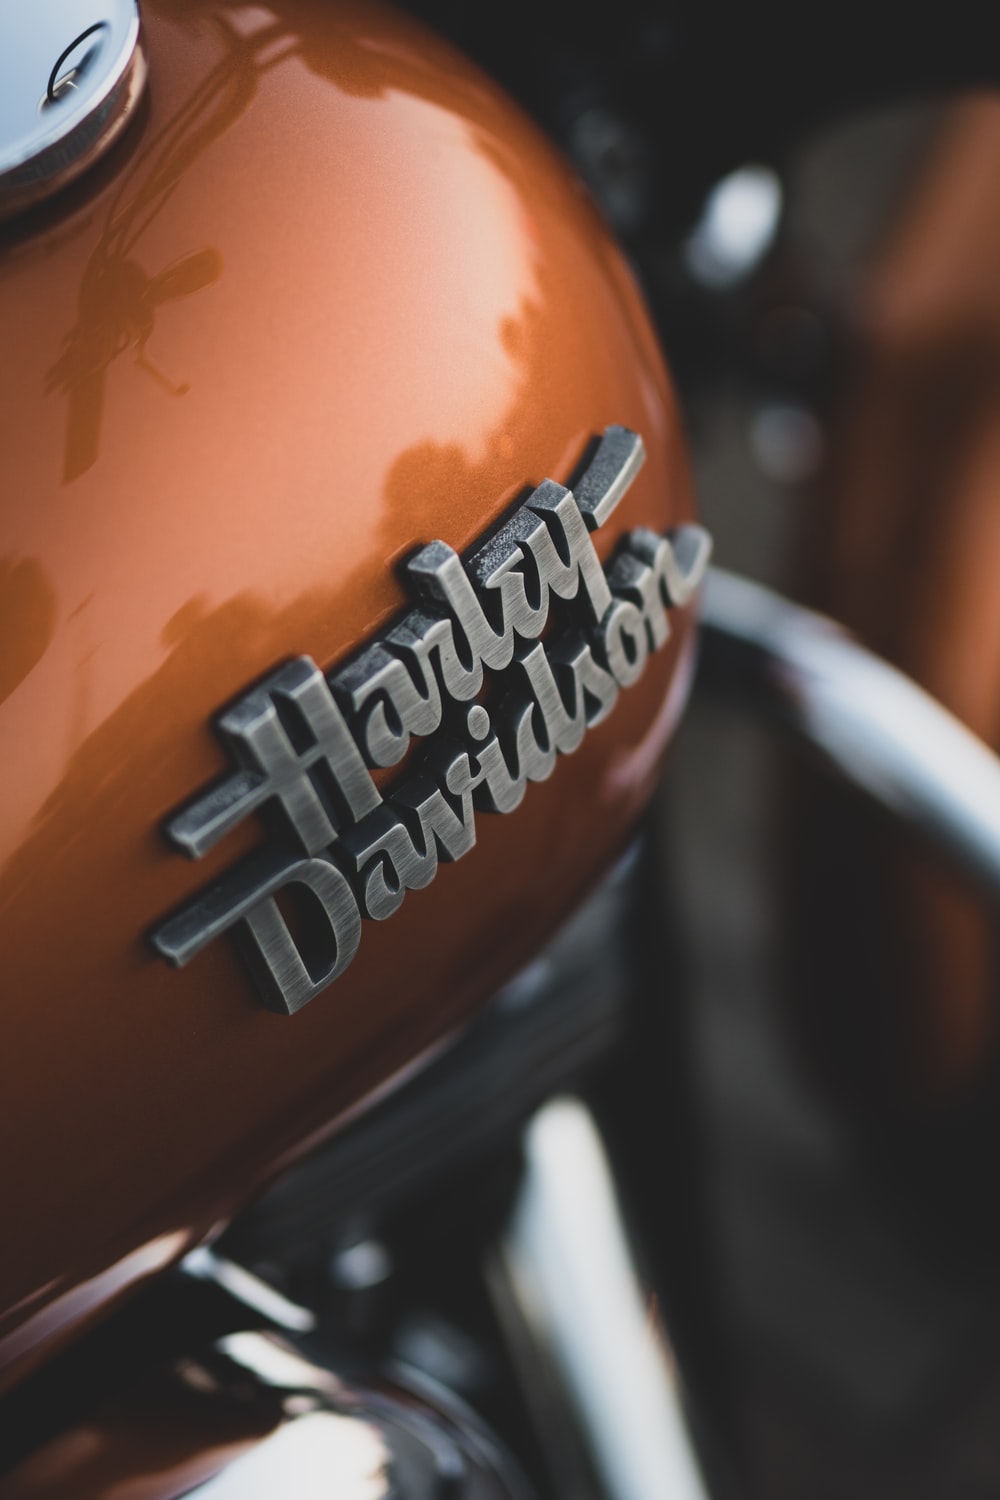 Cool Harley Davidson Wallpapers